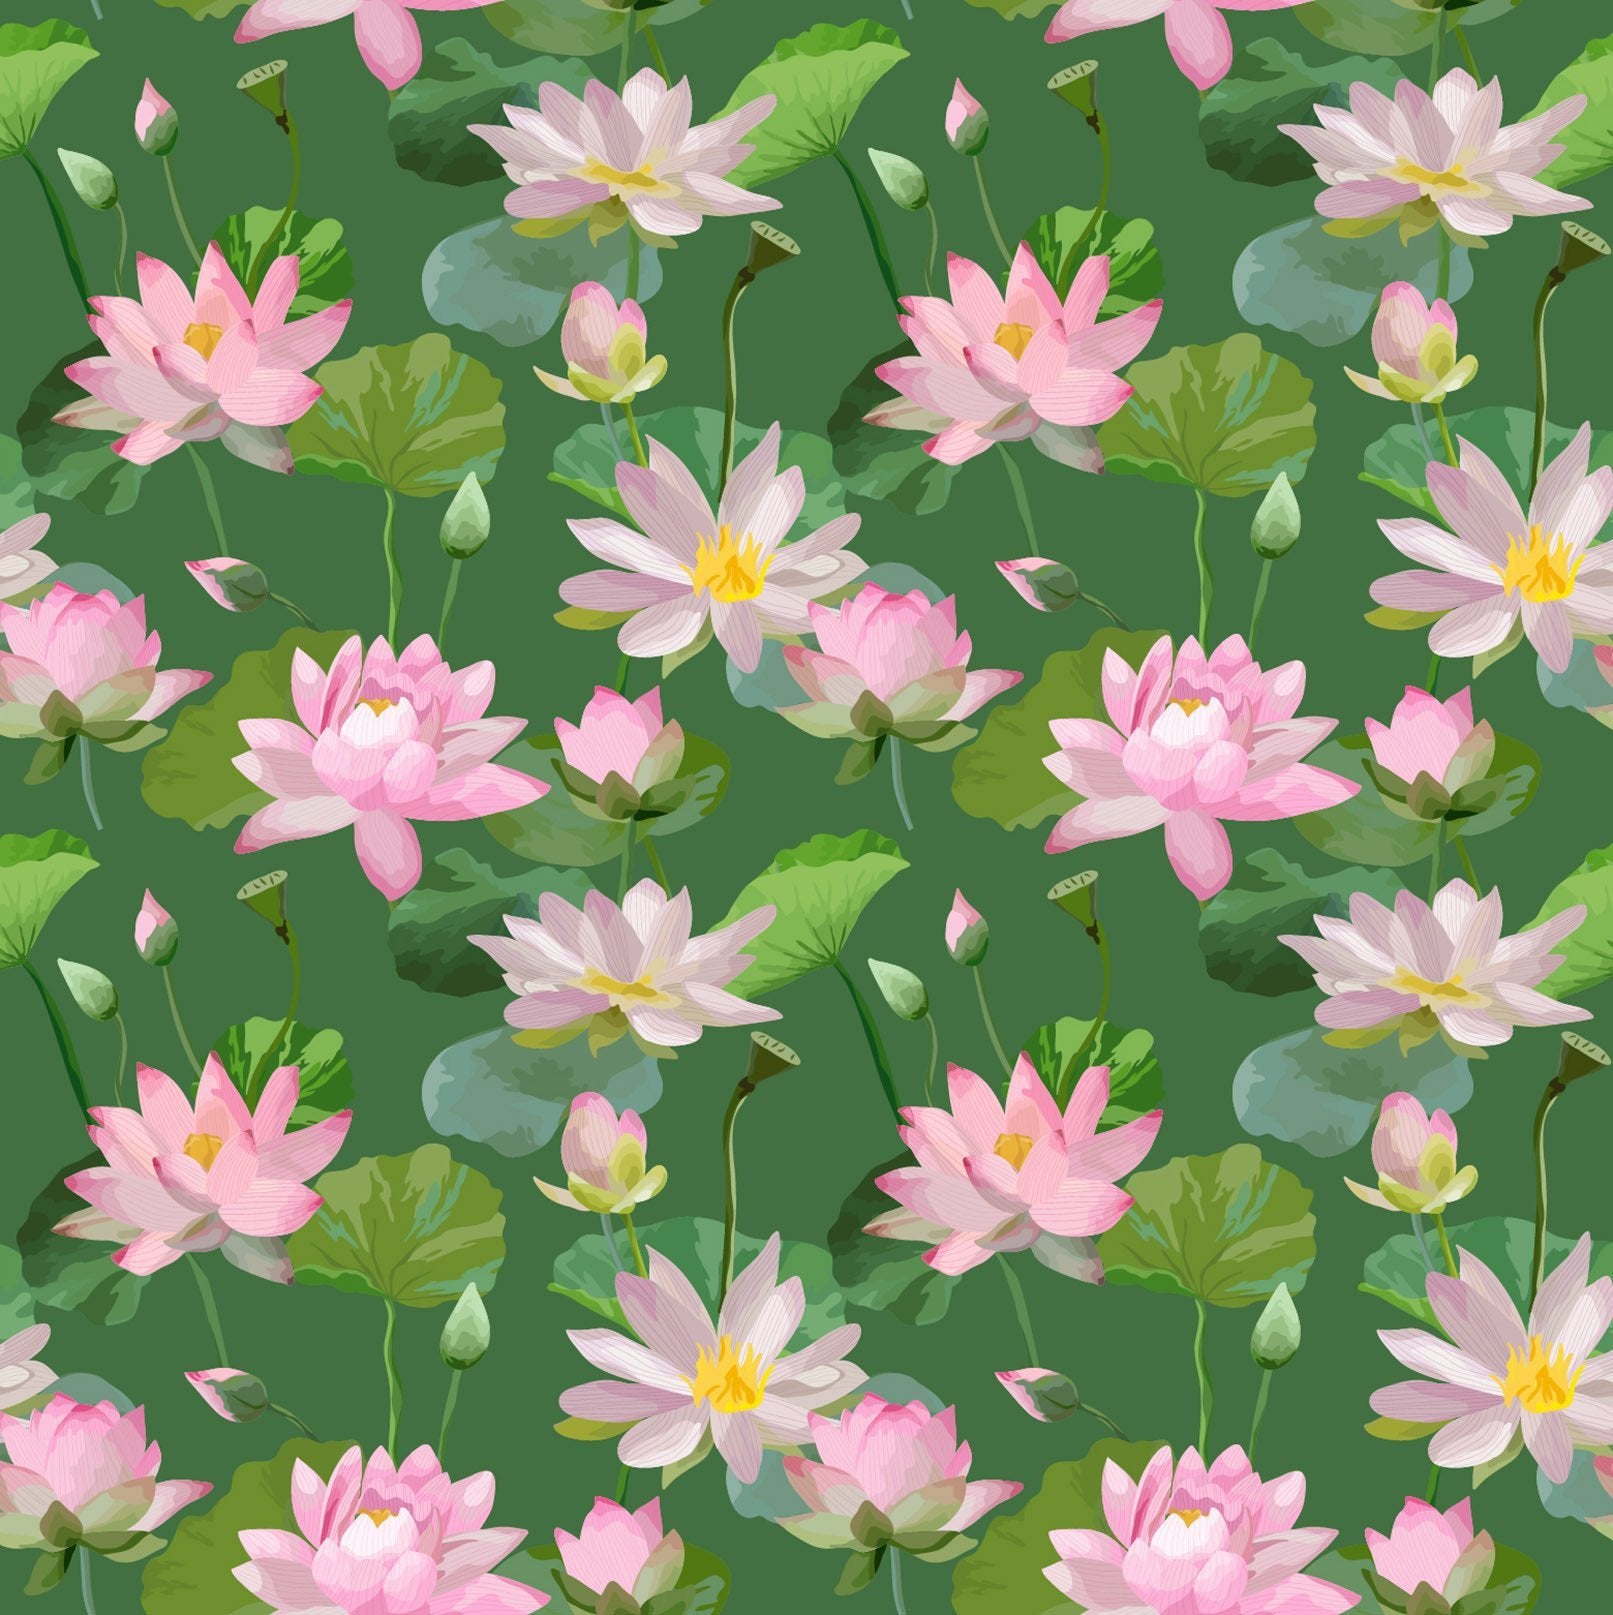 3D Lotus Flowers 538 Kitchen Mat Floor Mural Wallpaper AJ Wallpaper 